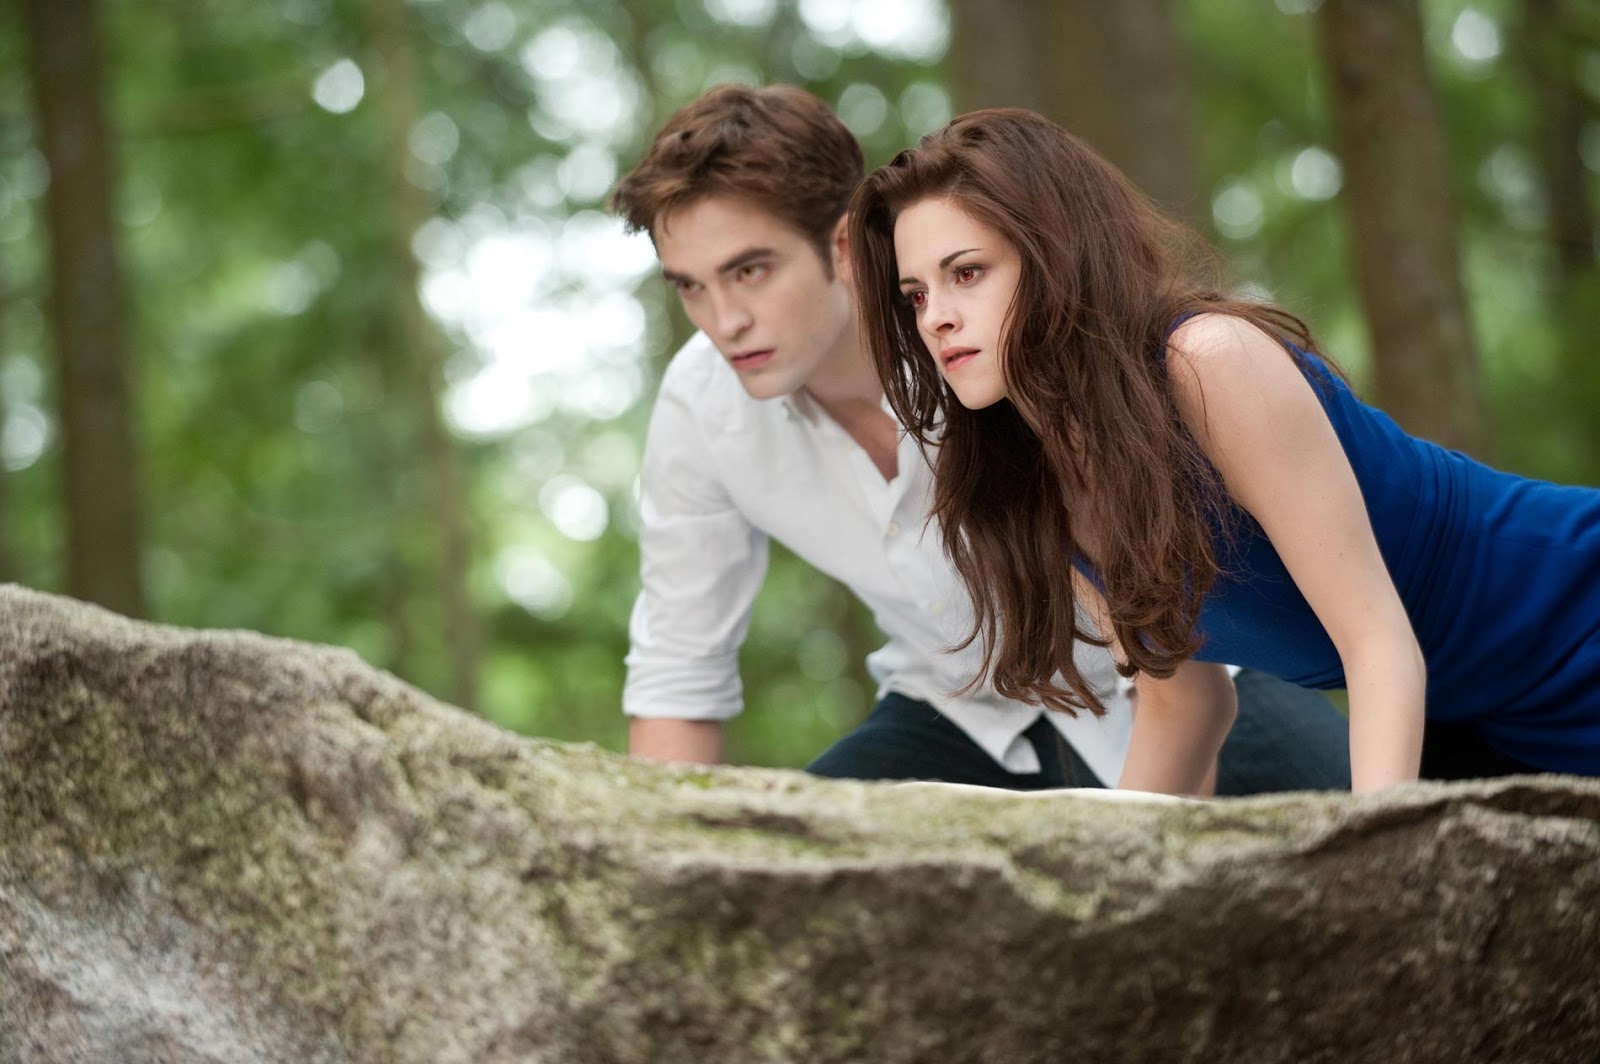 Robert Pattinson in The Twilight Saga: Breaking Dawn - Part 2